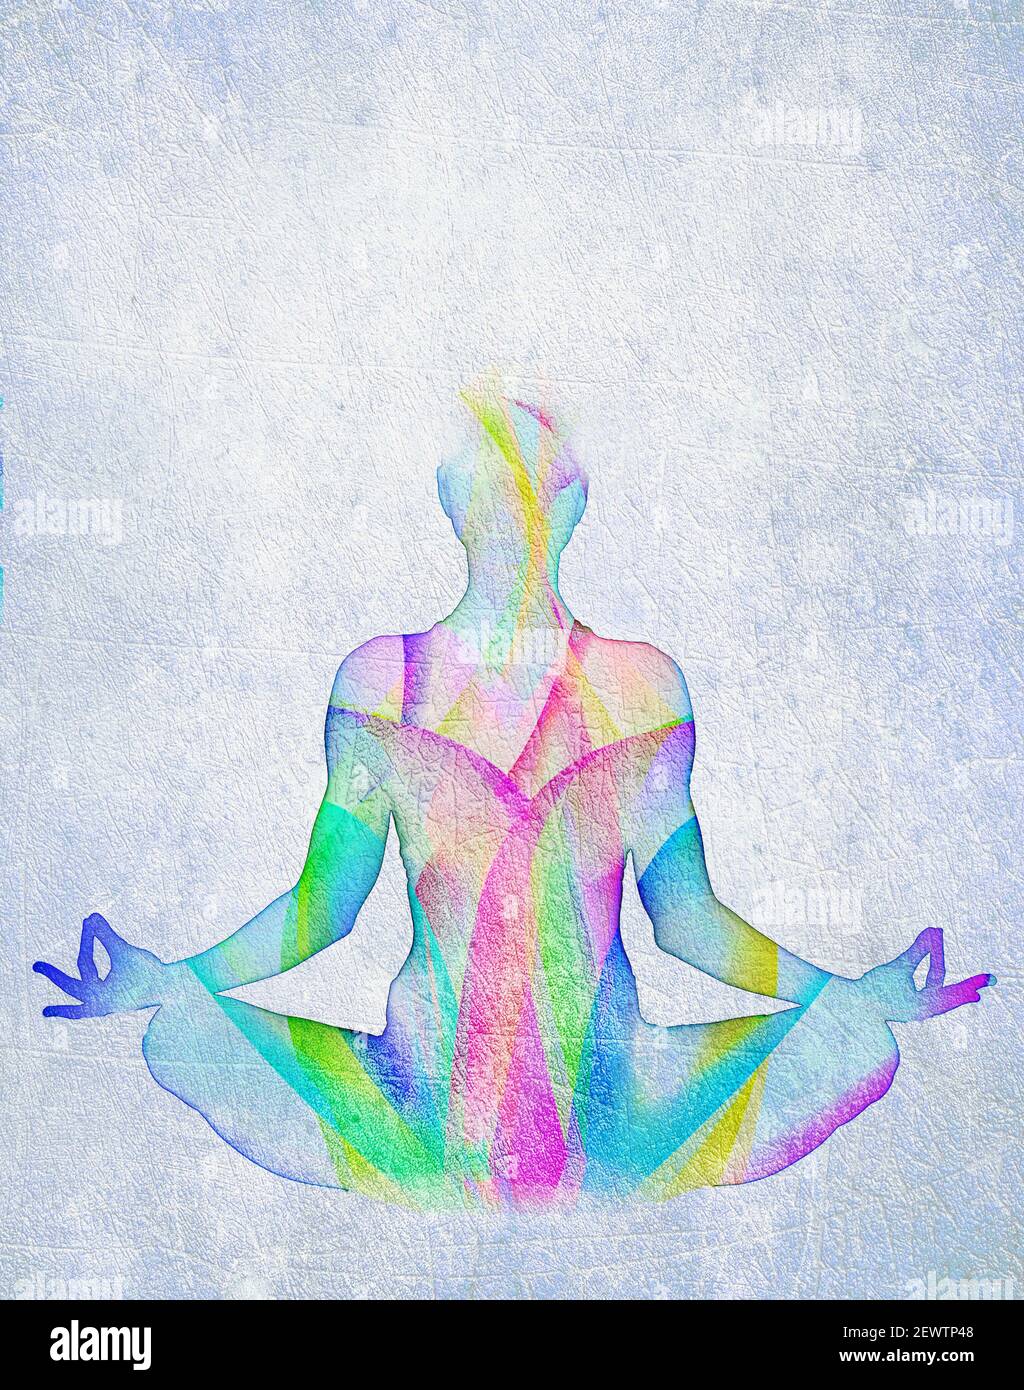 meditation yoga pose illustration Stock Photo